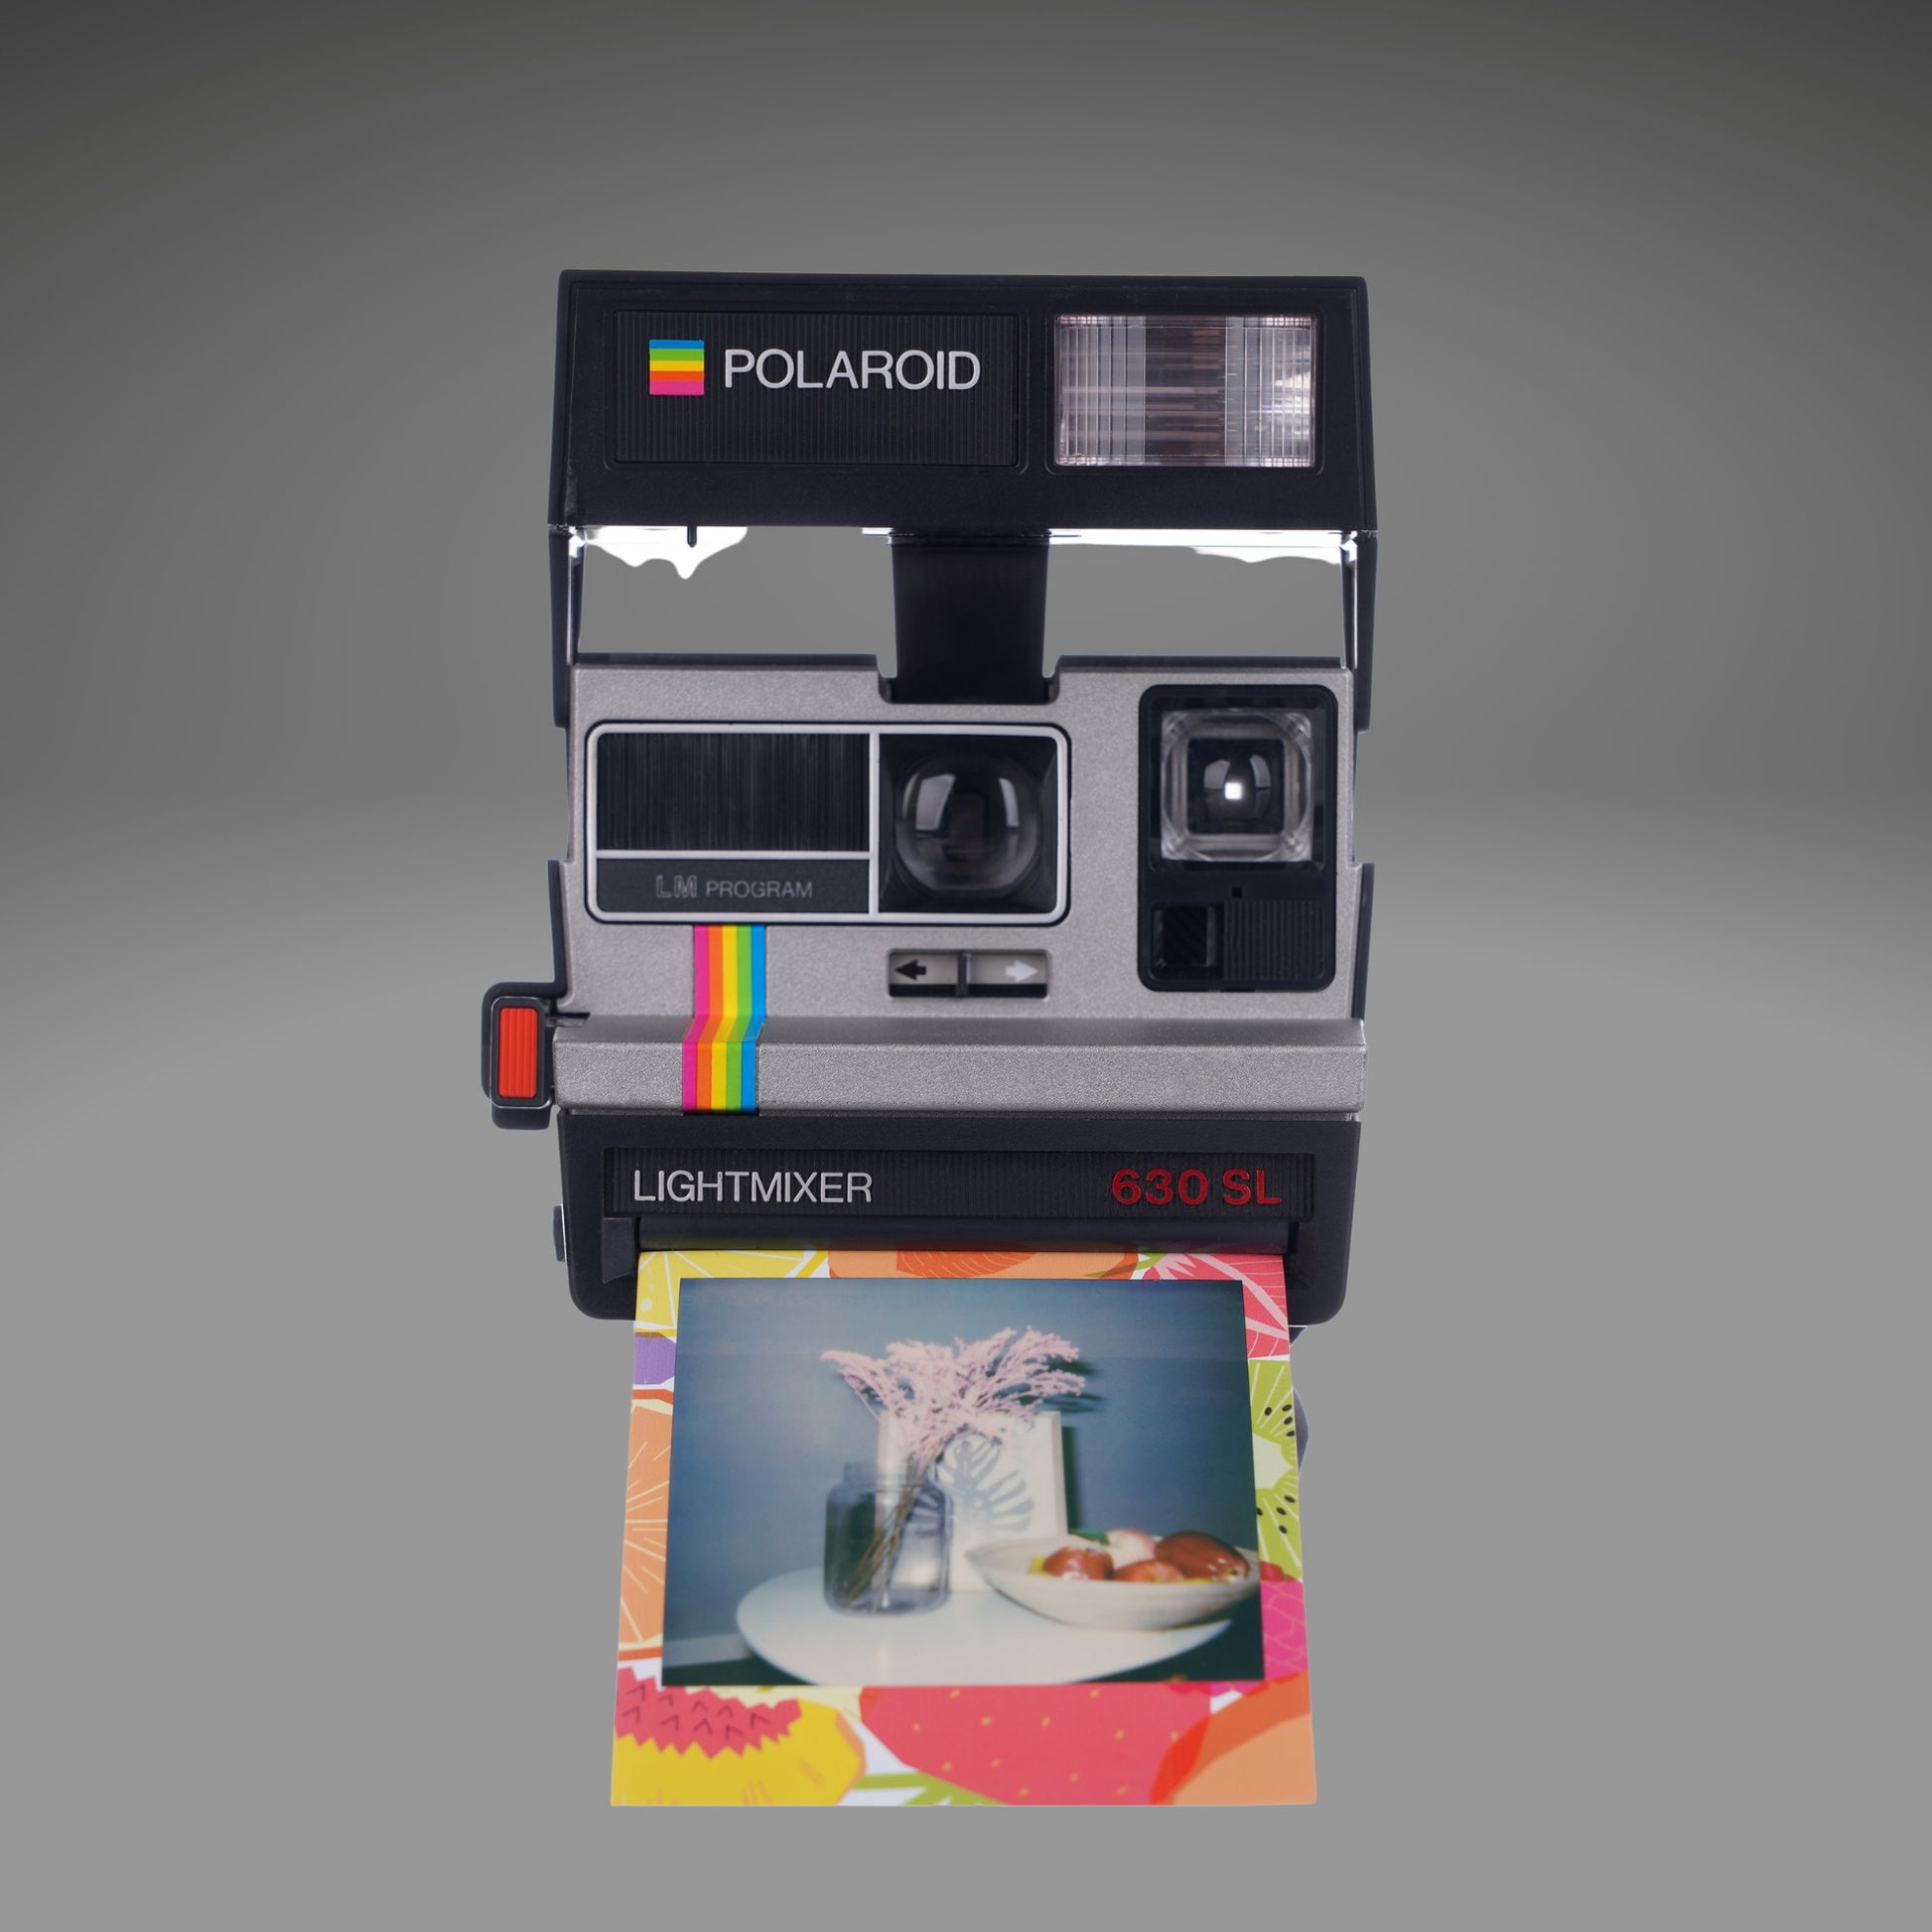 Perfectly Working Polaroid Camera, Polaroid 630 SL Lightmixer, Vintage Instant Camera - Vintage Polaroid Instant Cameras